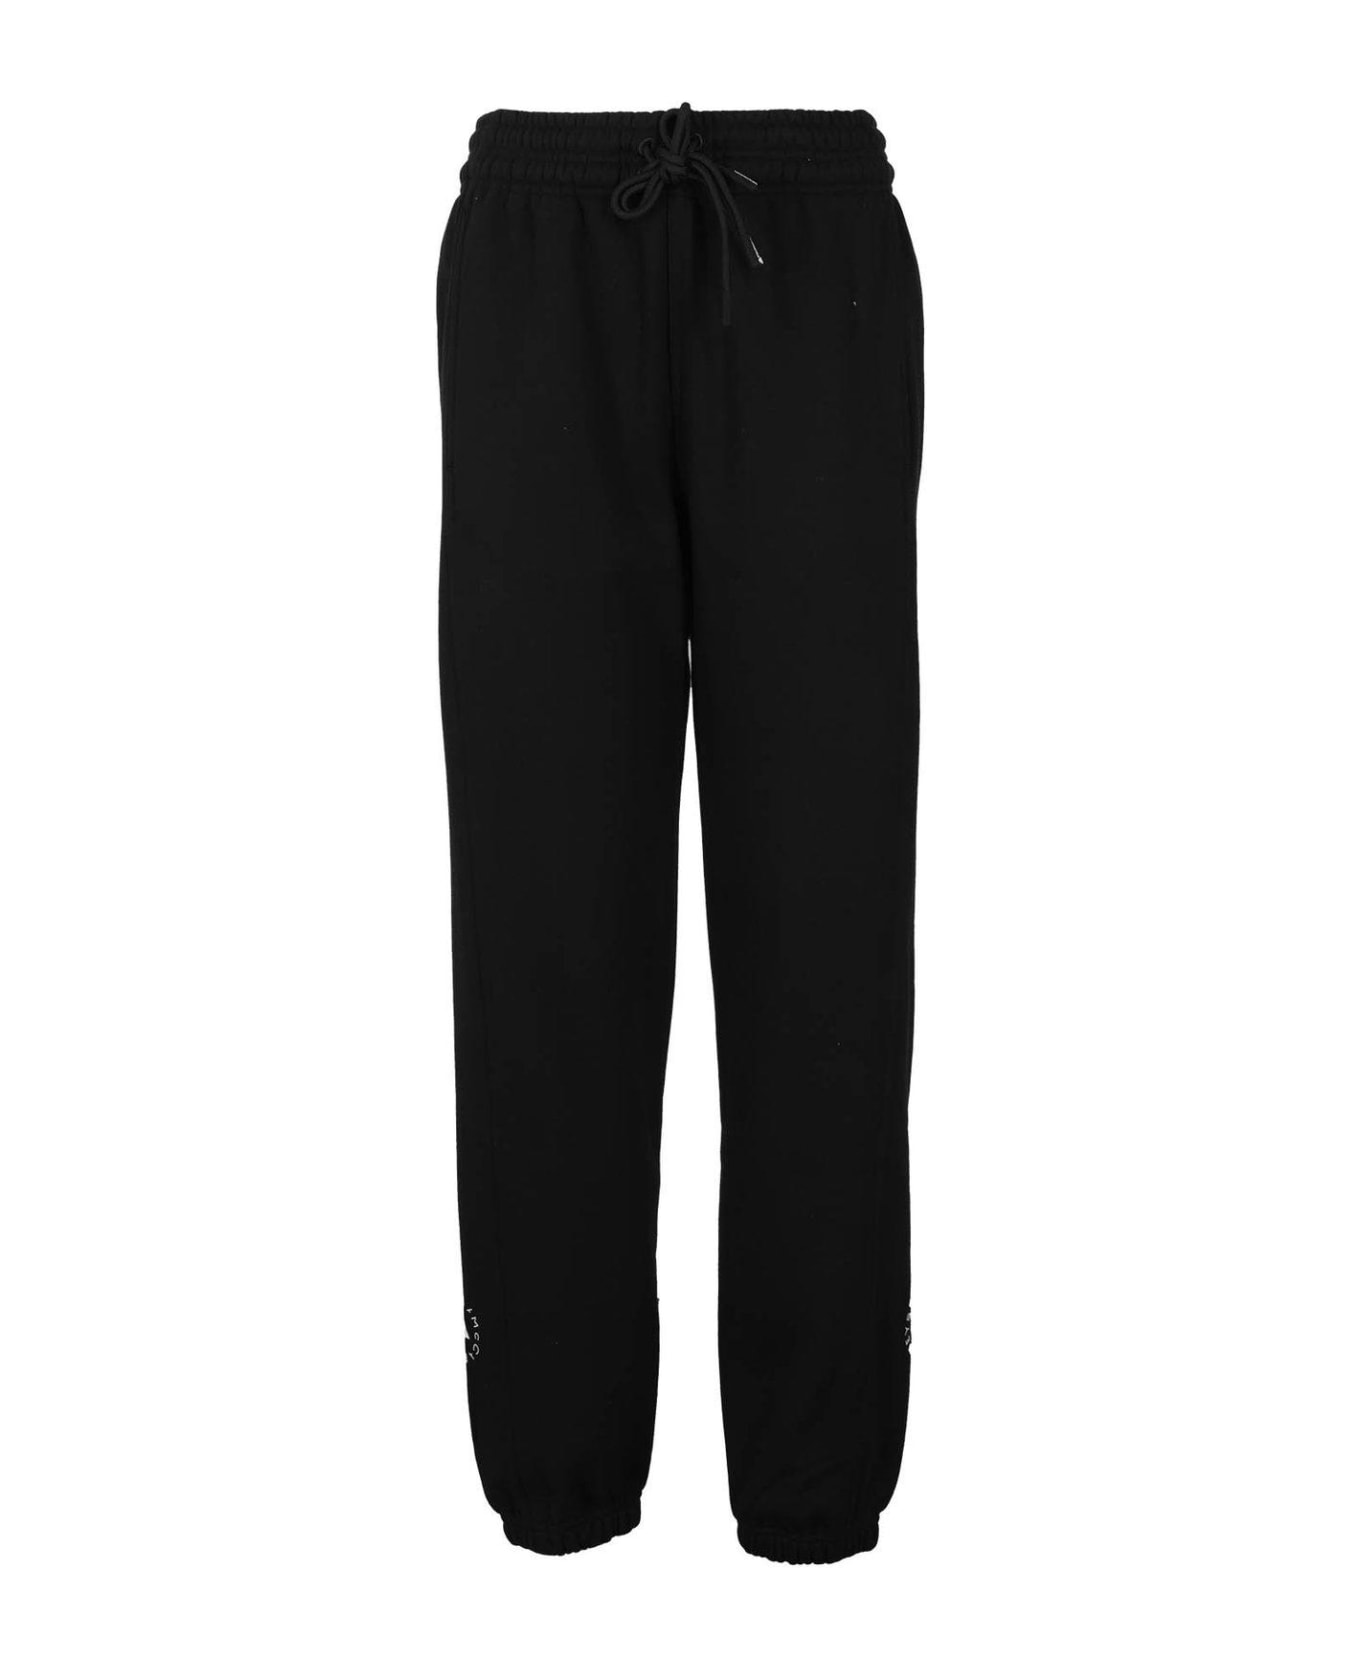 Adidas by Stella McCartney Logo Printed Drawstring Track Pants - Black